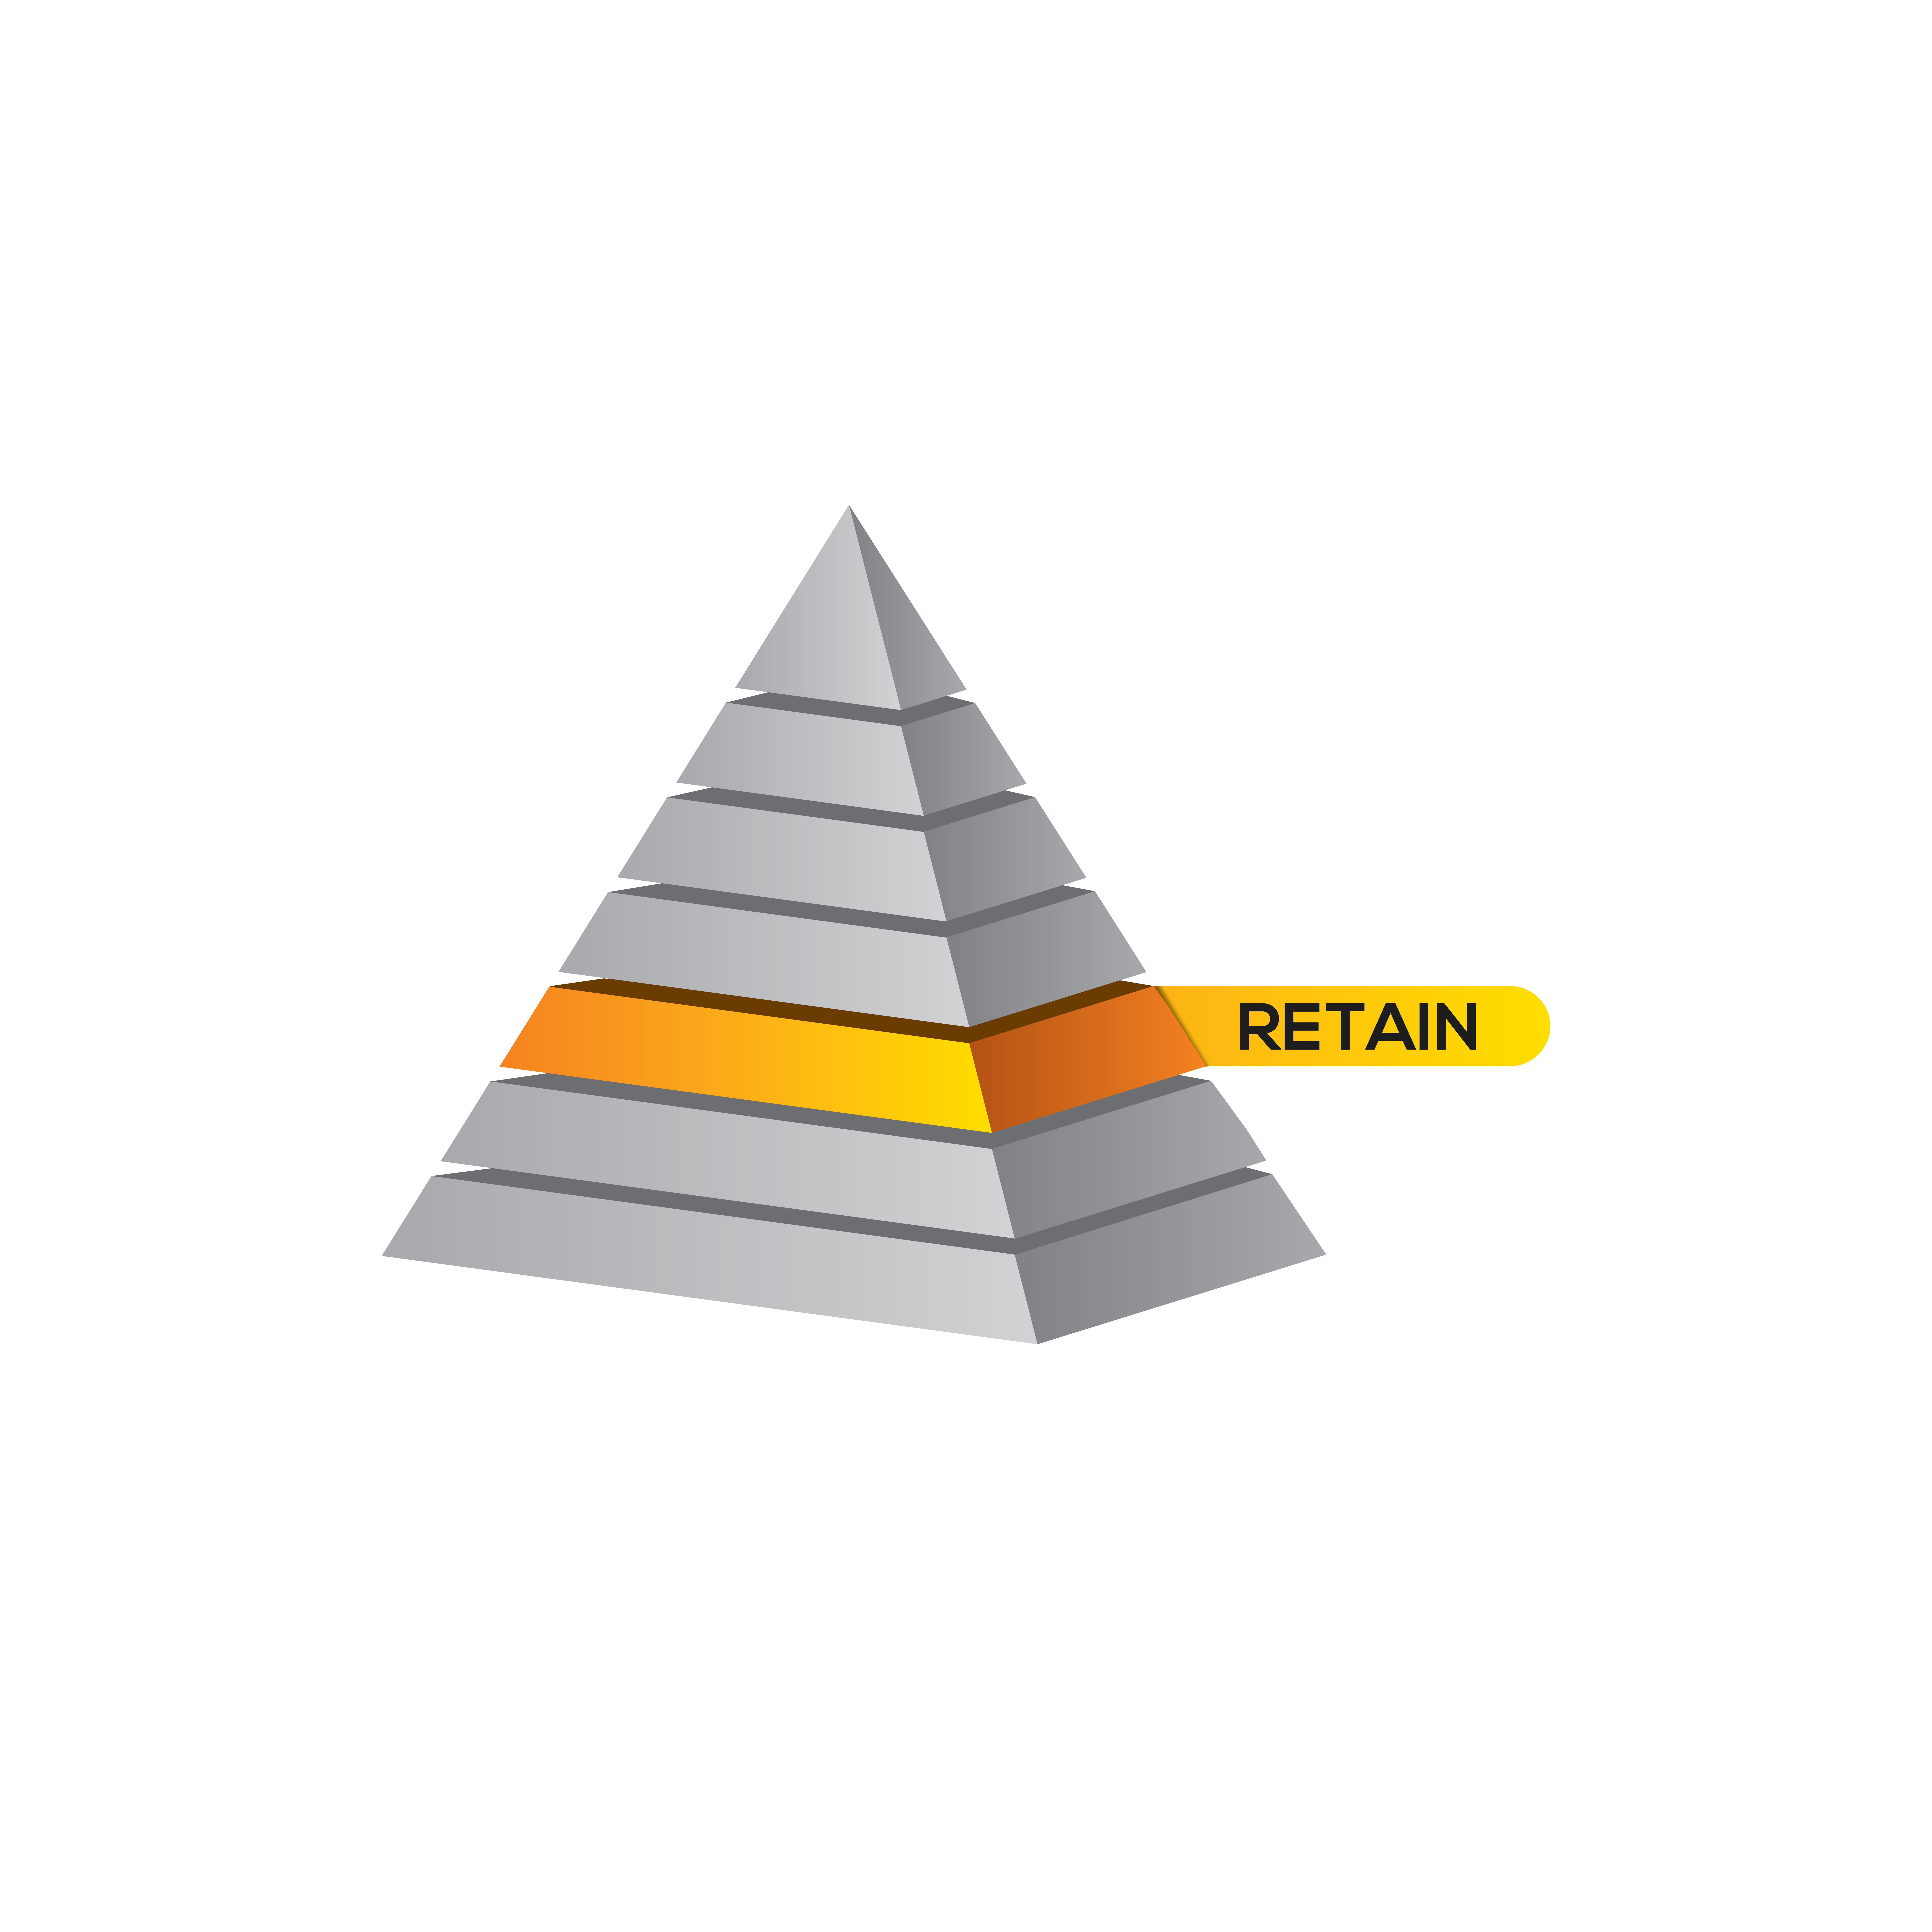 pyramid retain